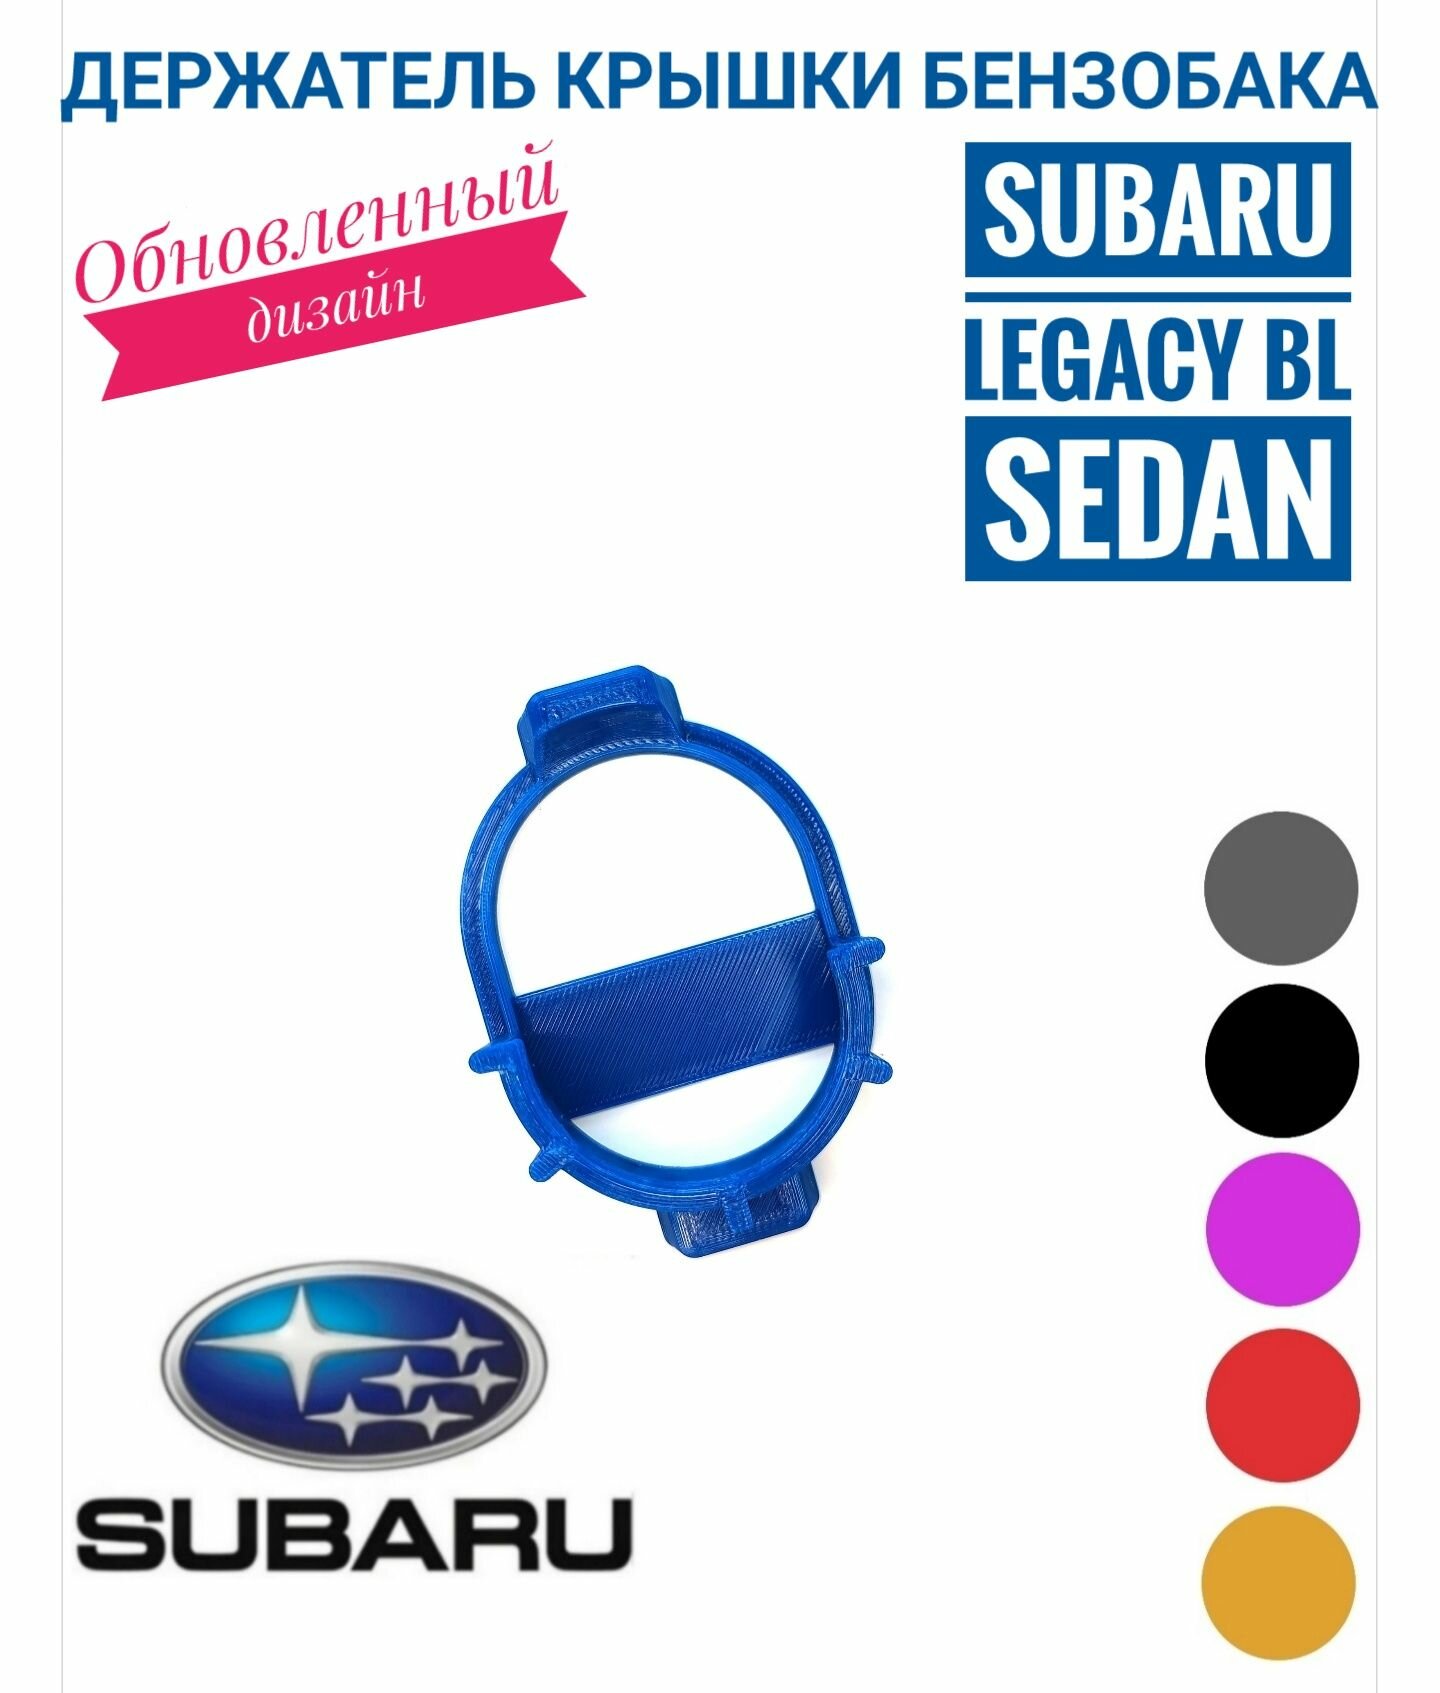 Subaru Legacy Sedan IV держатель для крышки бензобака